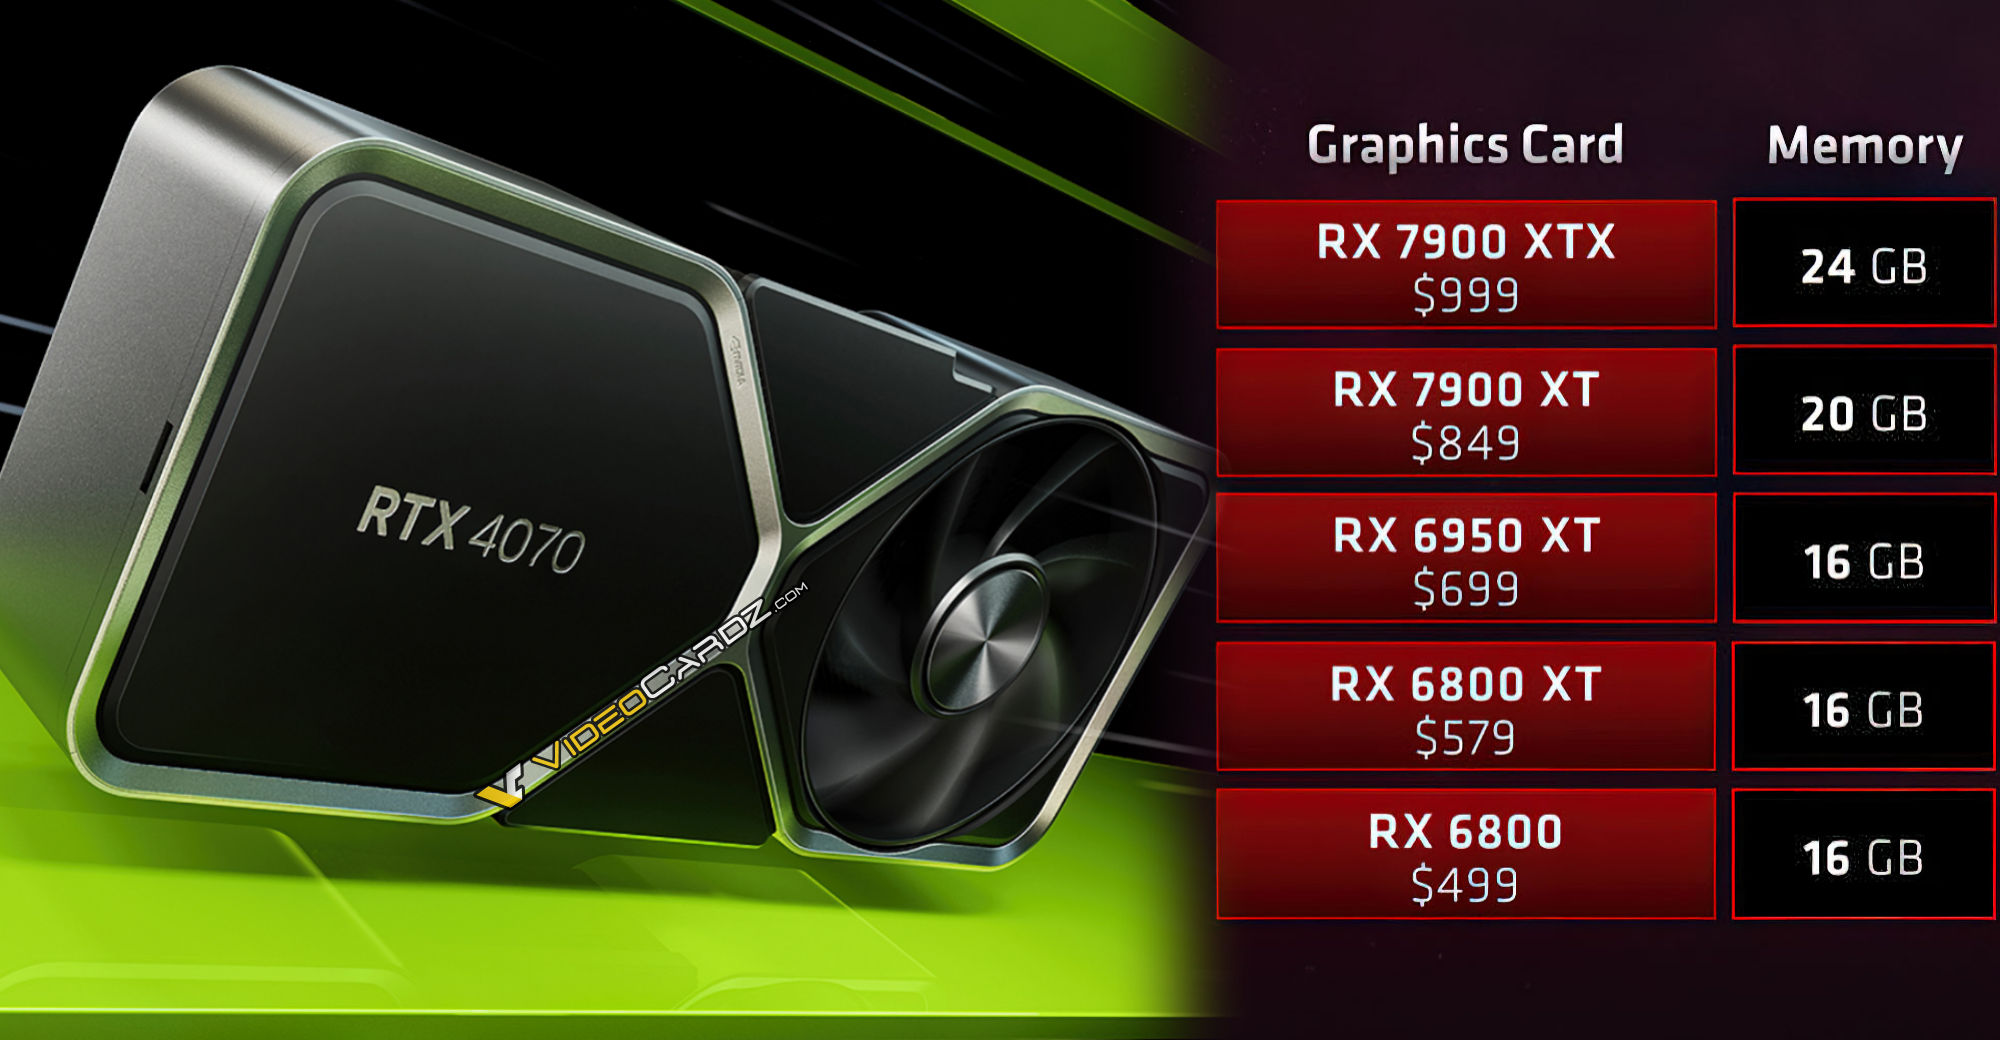 AMD 表示“更多内存很重要”，正如 NVIDIA 即将推出 12GB RTX 4070 GPU